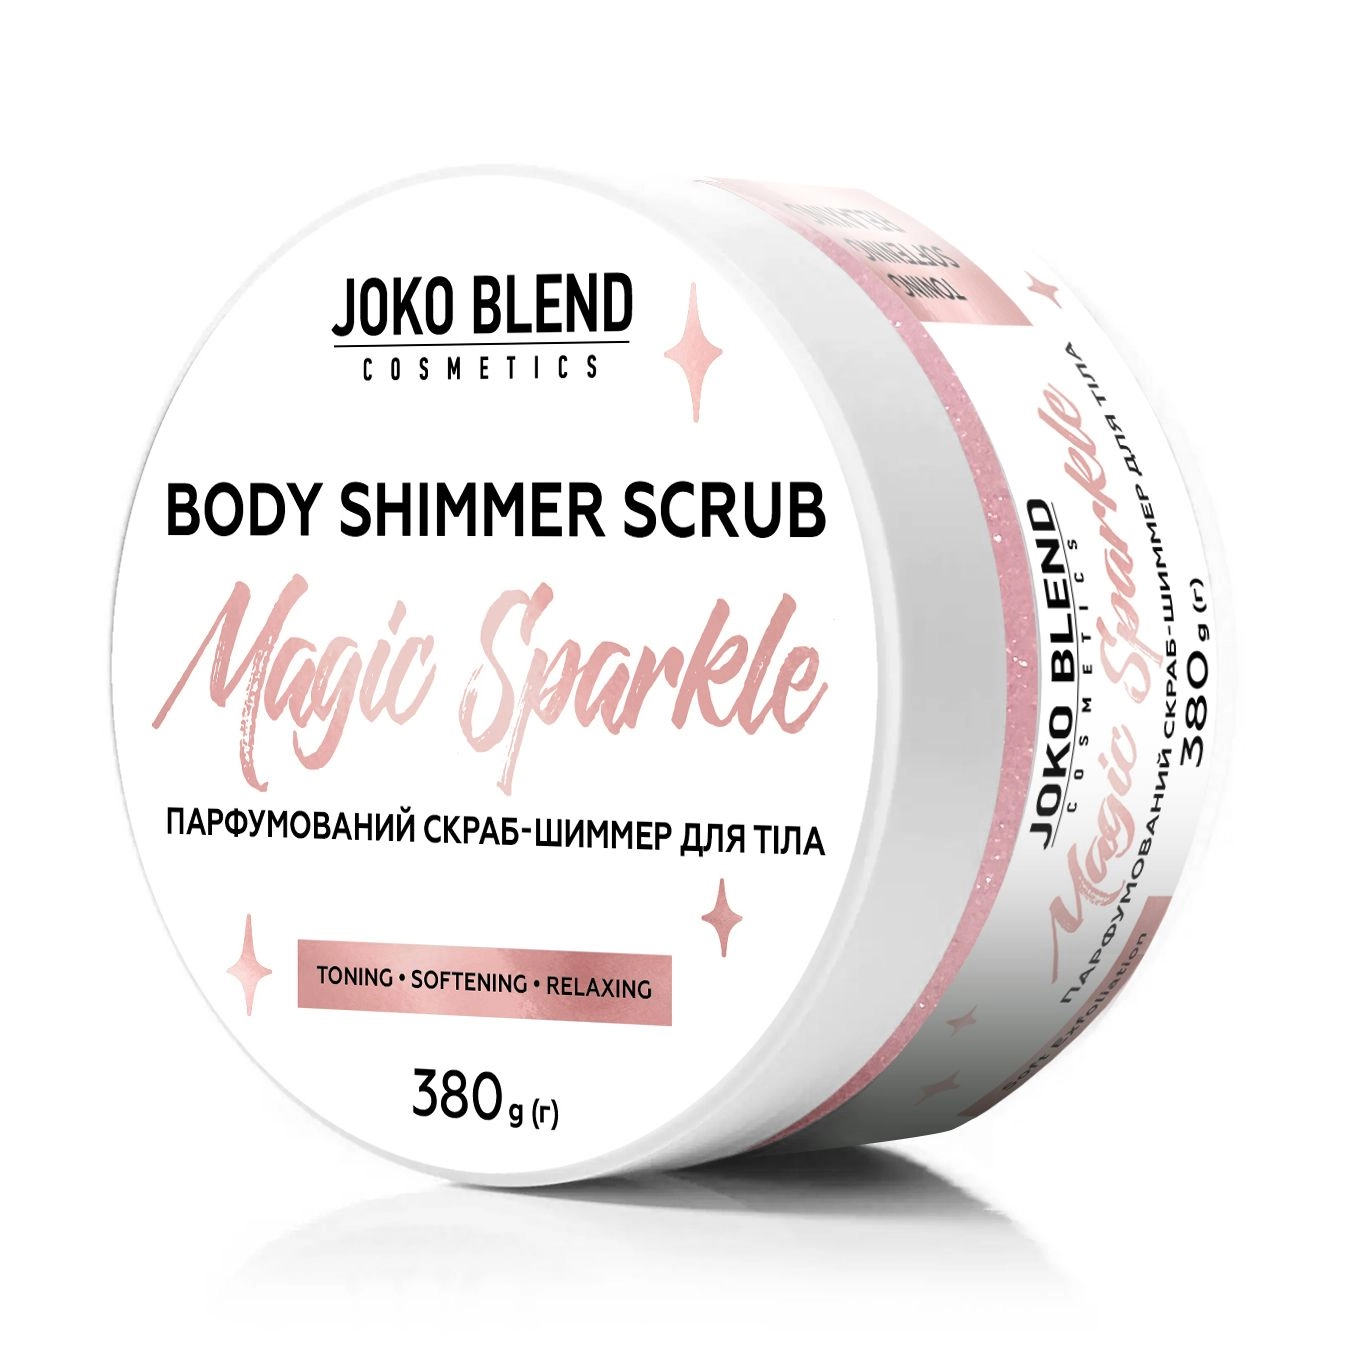 Joko Blend Парфумований cкраб-шиммер для тіла Magic Sparkle Body Shimmer Scrub, 380 г - фото N1